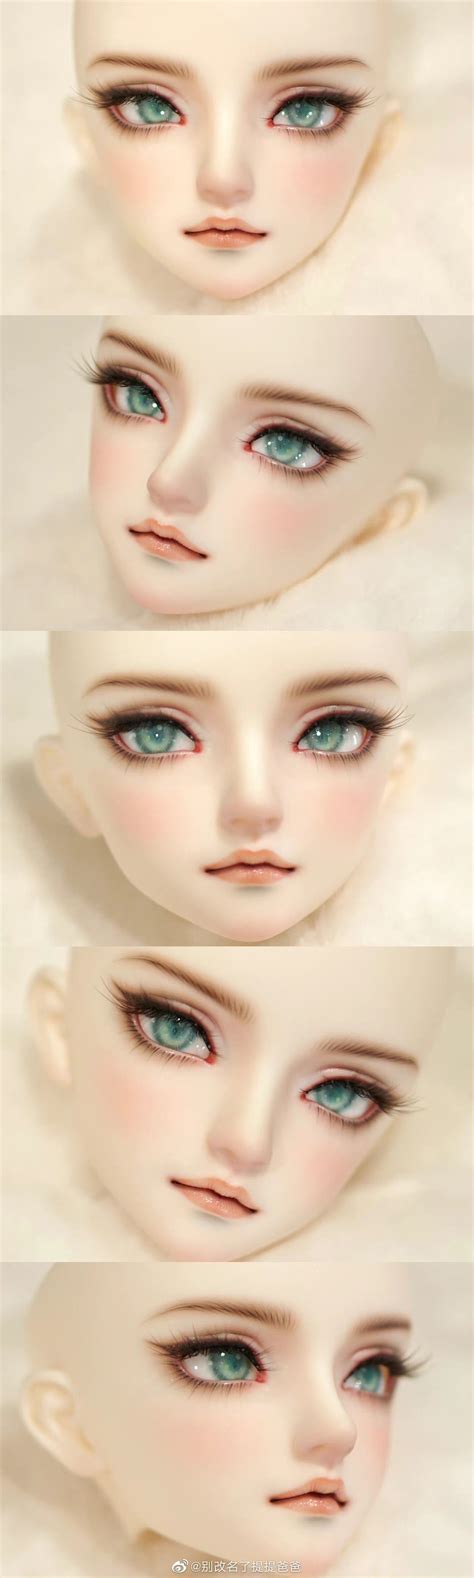 Gorgeous Art Beautiful Dolls 3d Pose Model Doll Face Makeup Doll